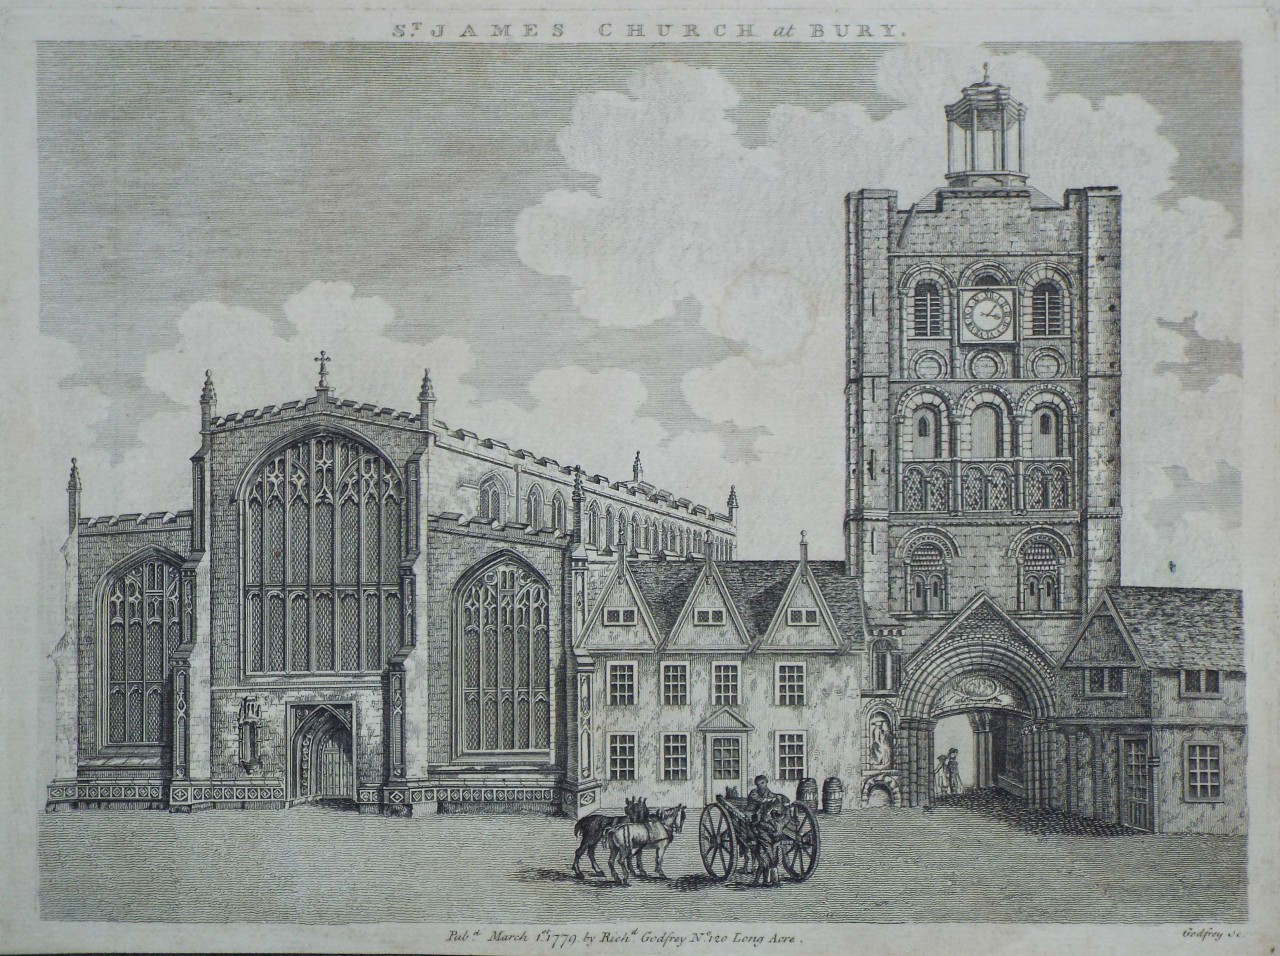 Print - St. James Church at Bury. - 